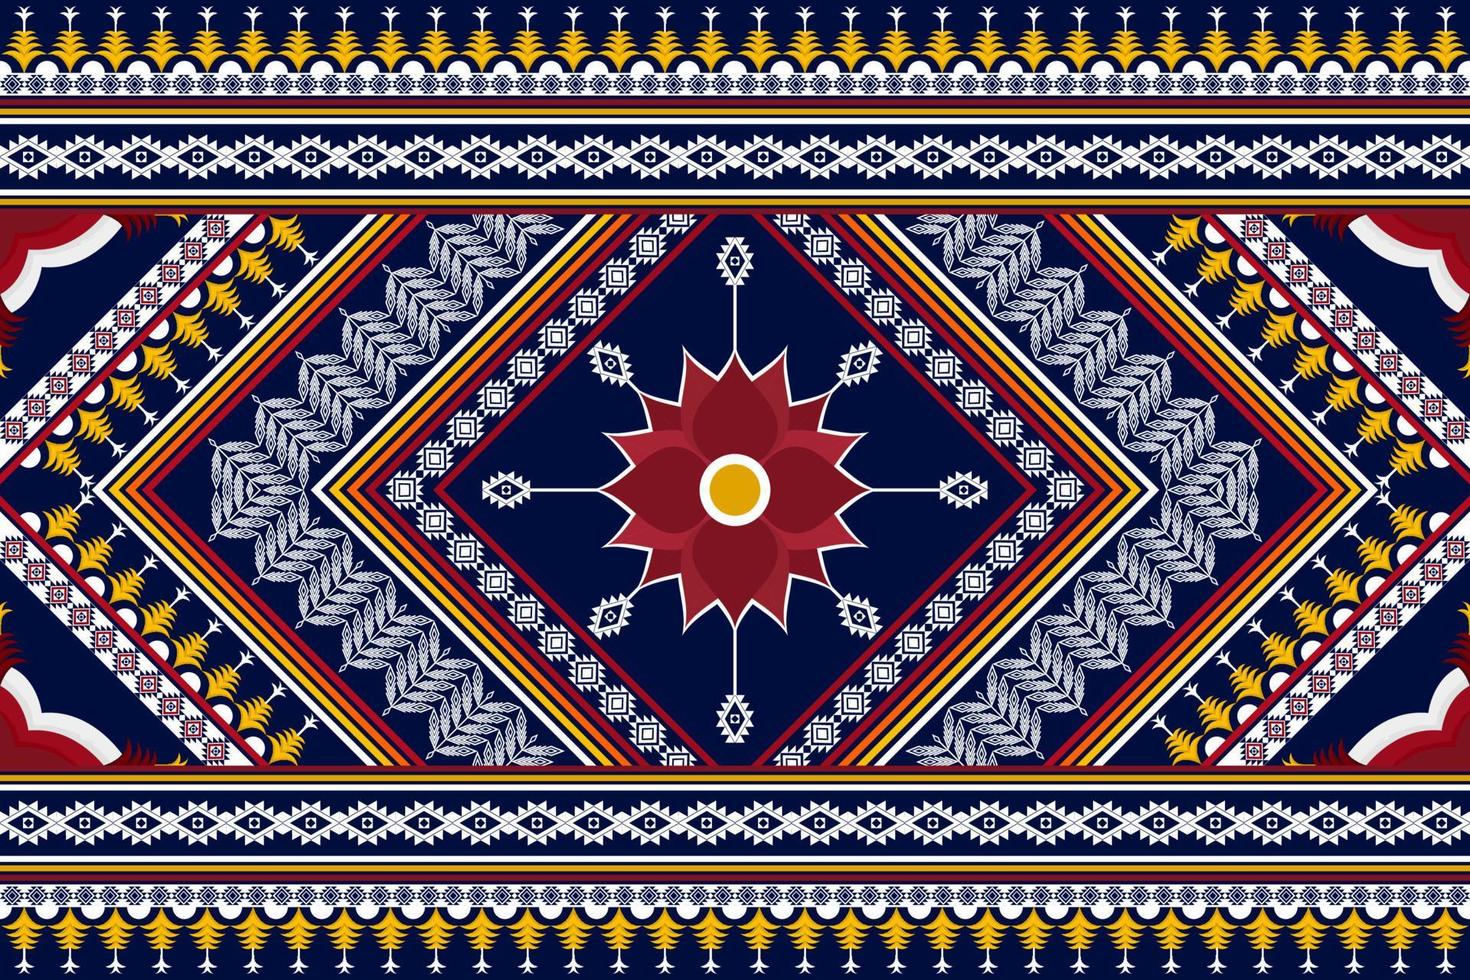 Abstract geometric ethnic pattern design. Aztec fabric carpet mandala ornament boho native chevron textile decoration wallpaper. Tribal ethnic traditional embroidery vector background